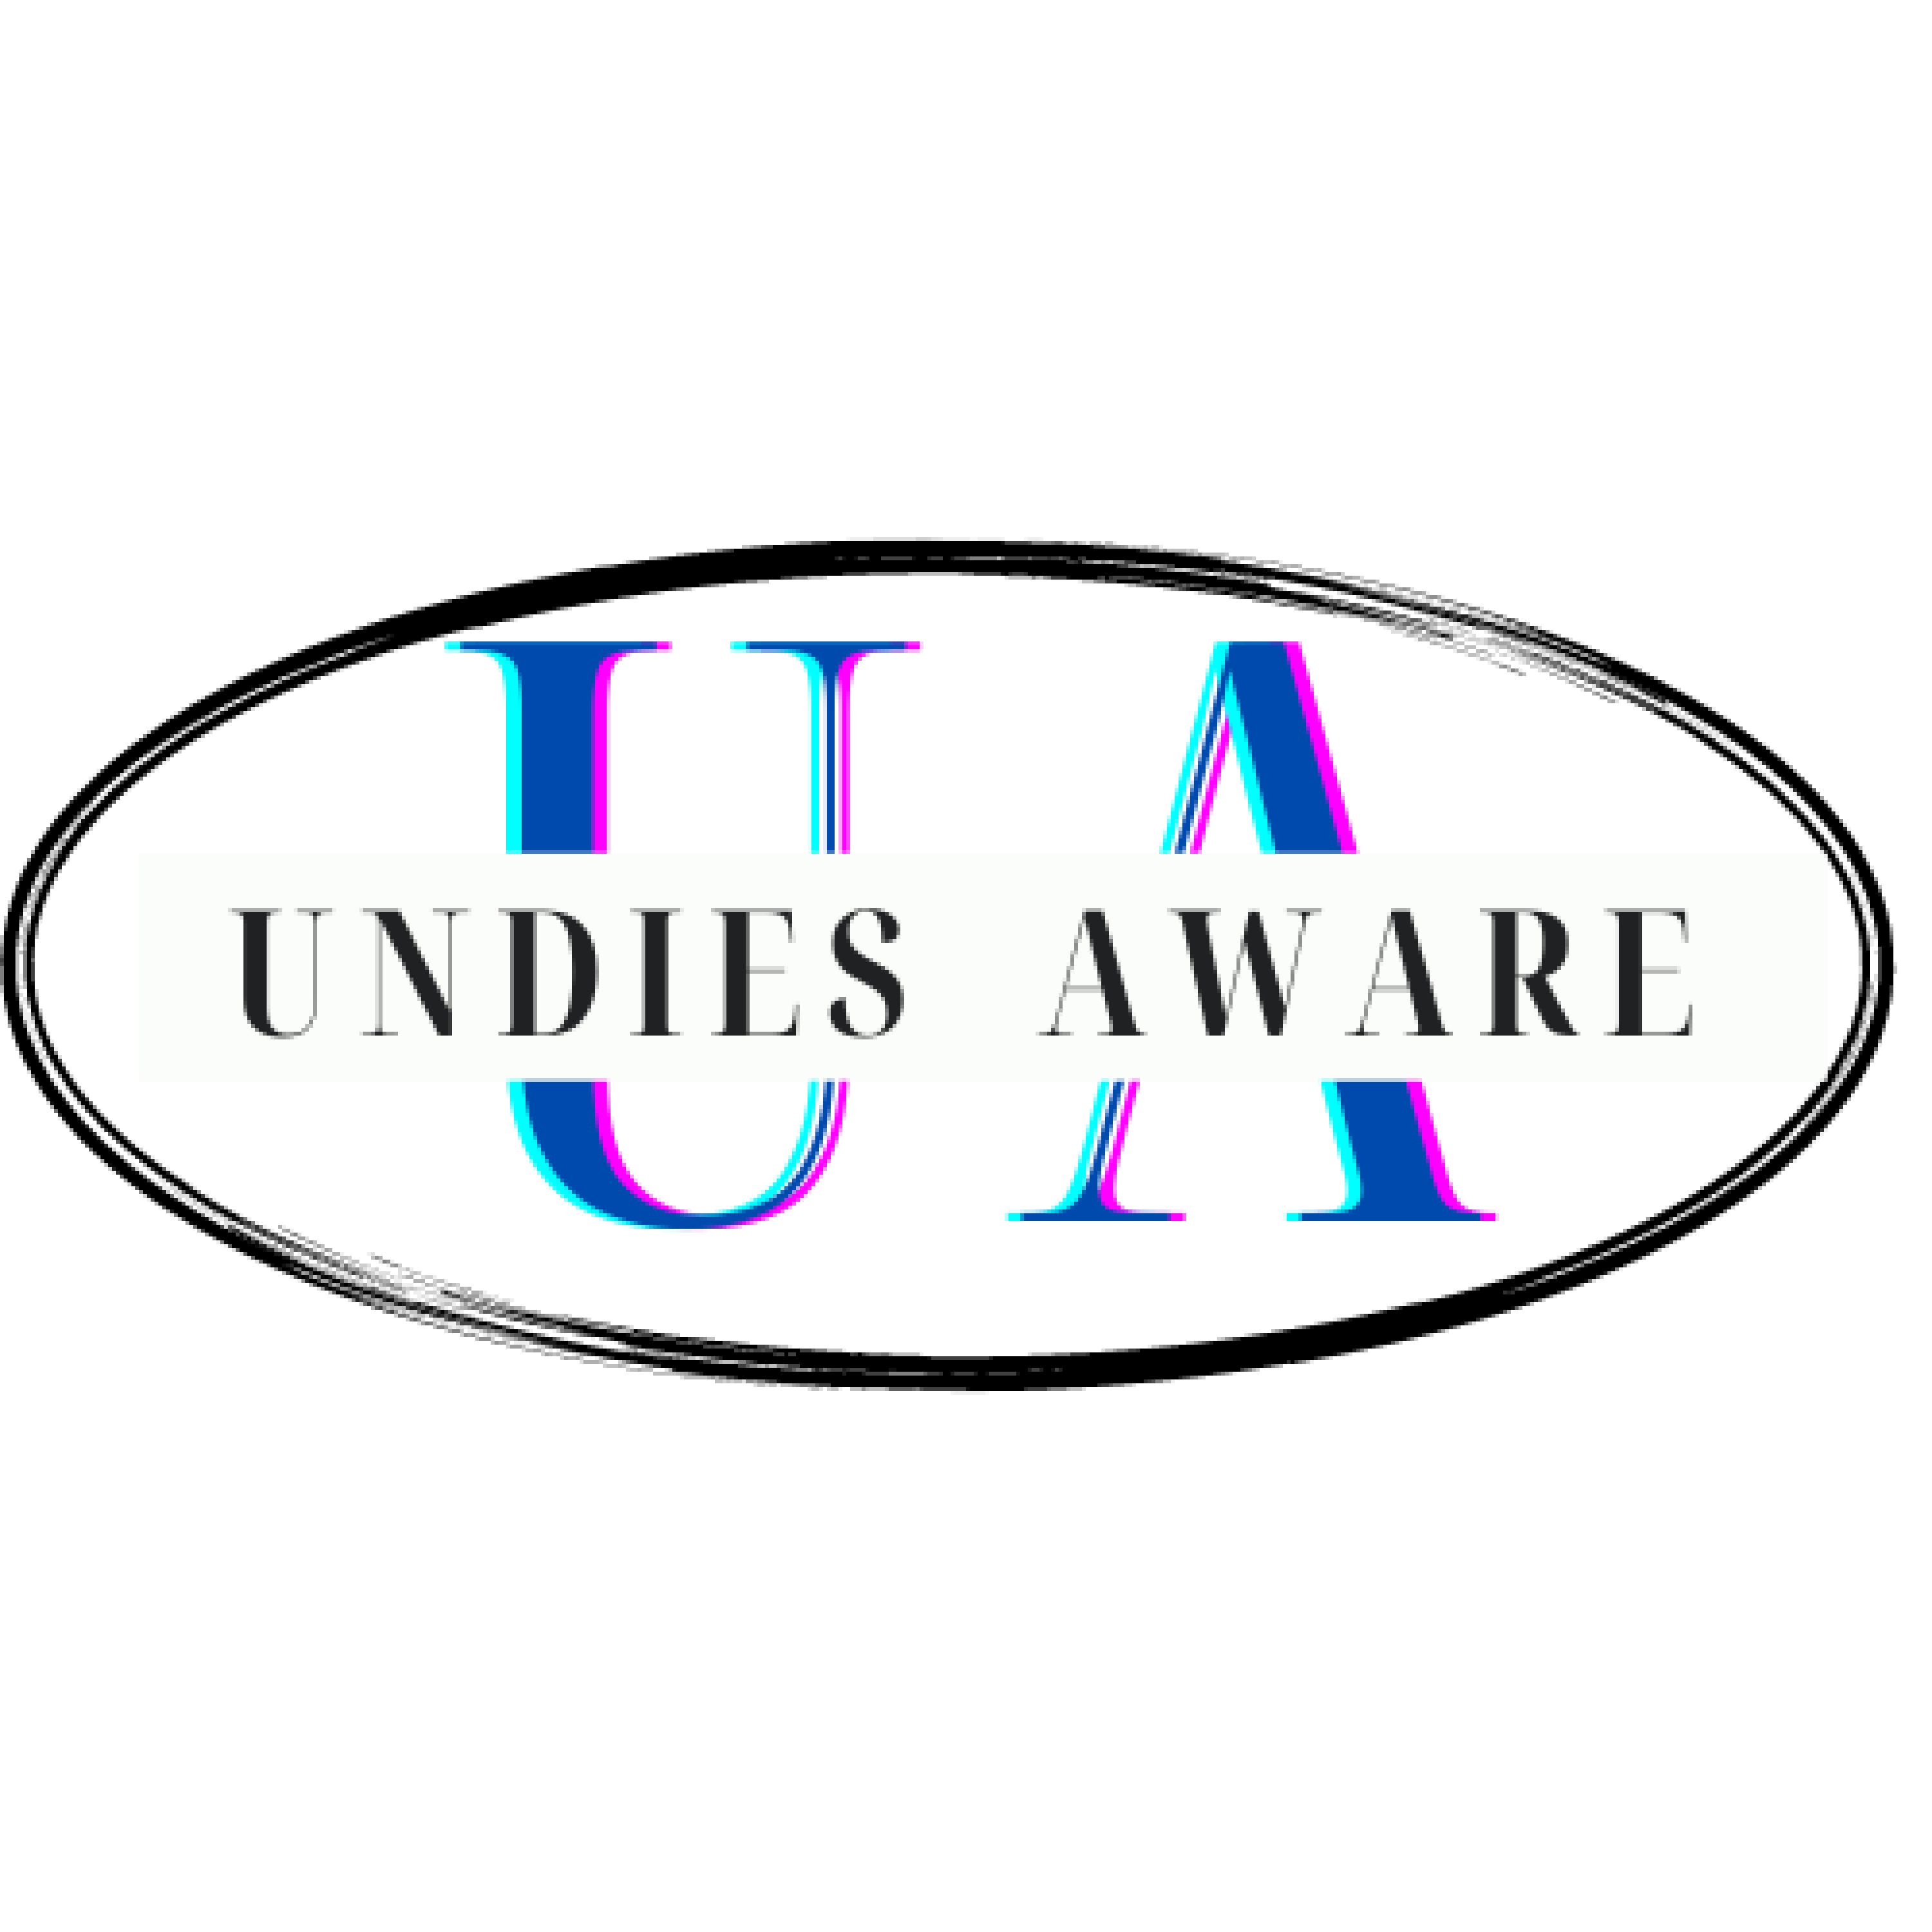 Undies_aware_logo